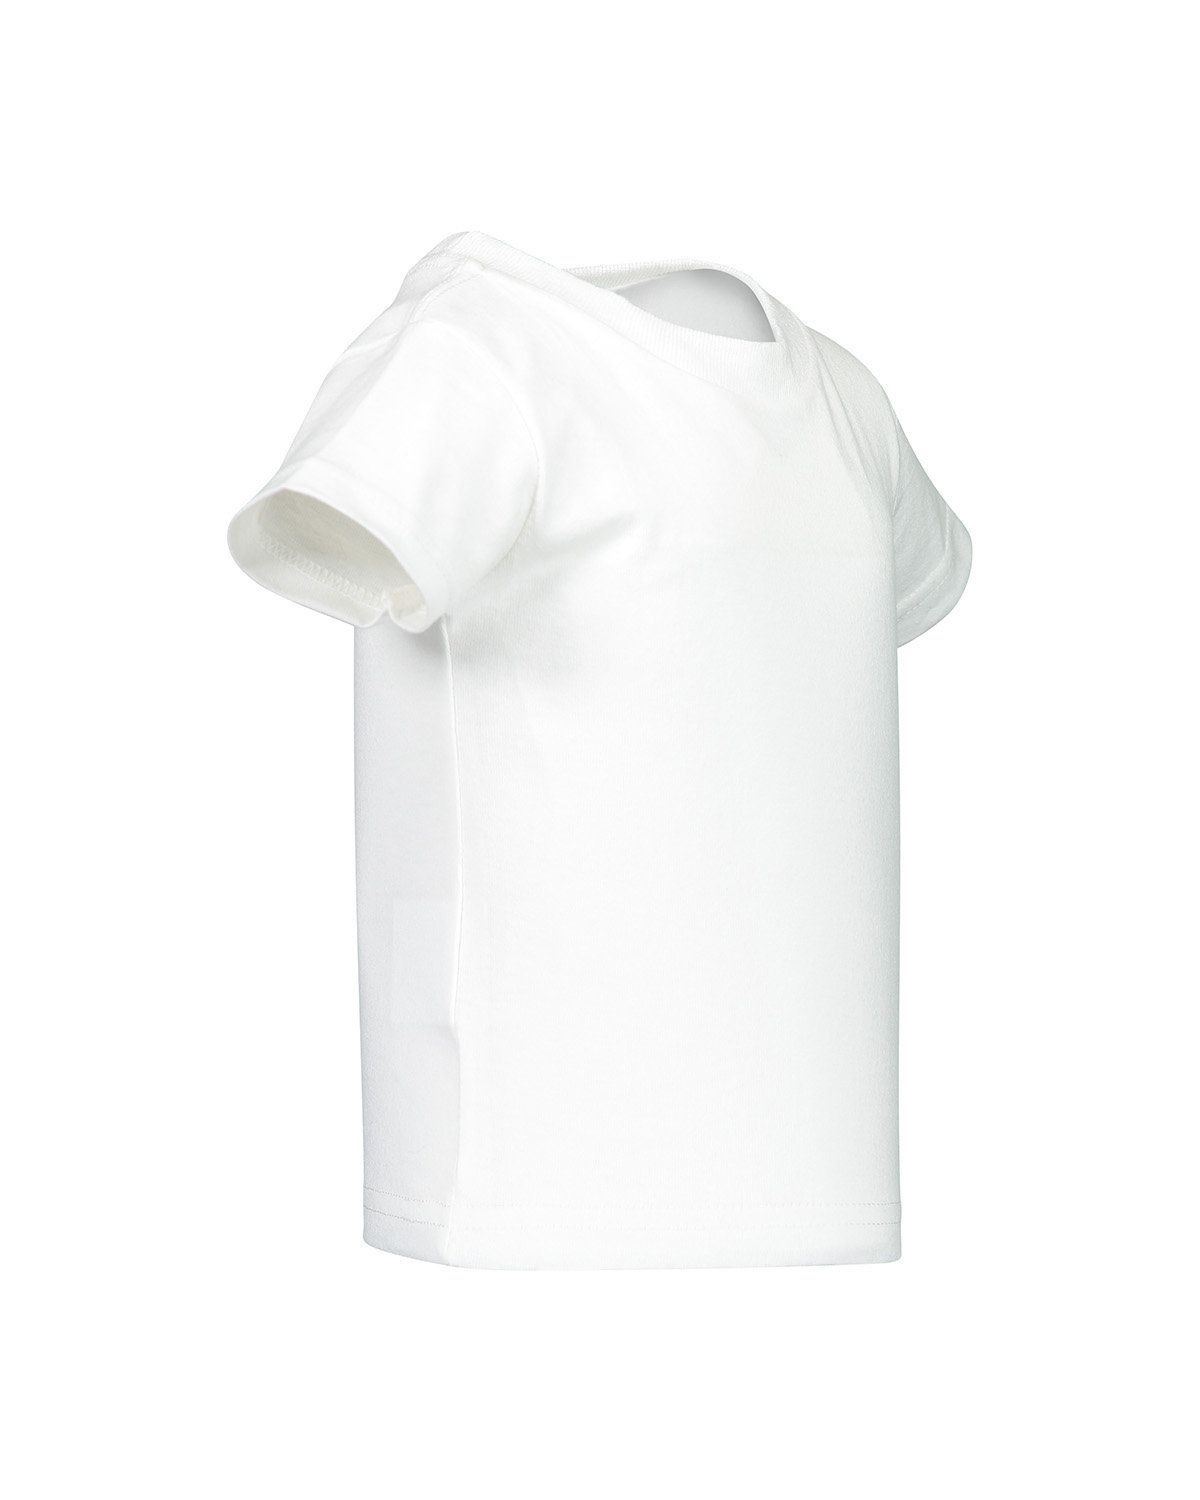 'Rabbit Skins 3401 Infant Cotton Jersey T-Shirt'